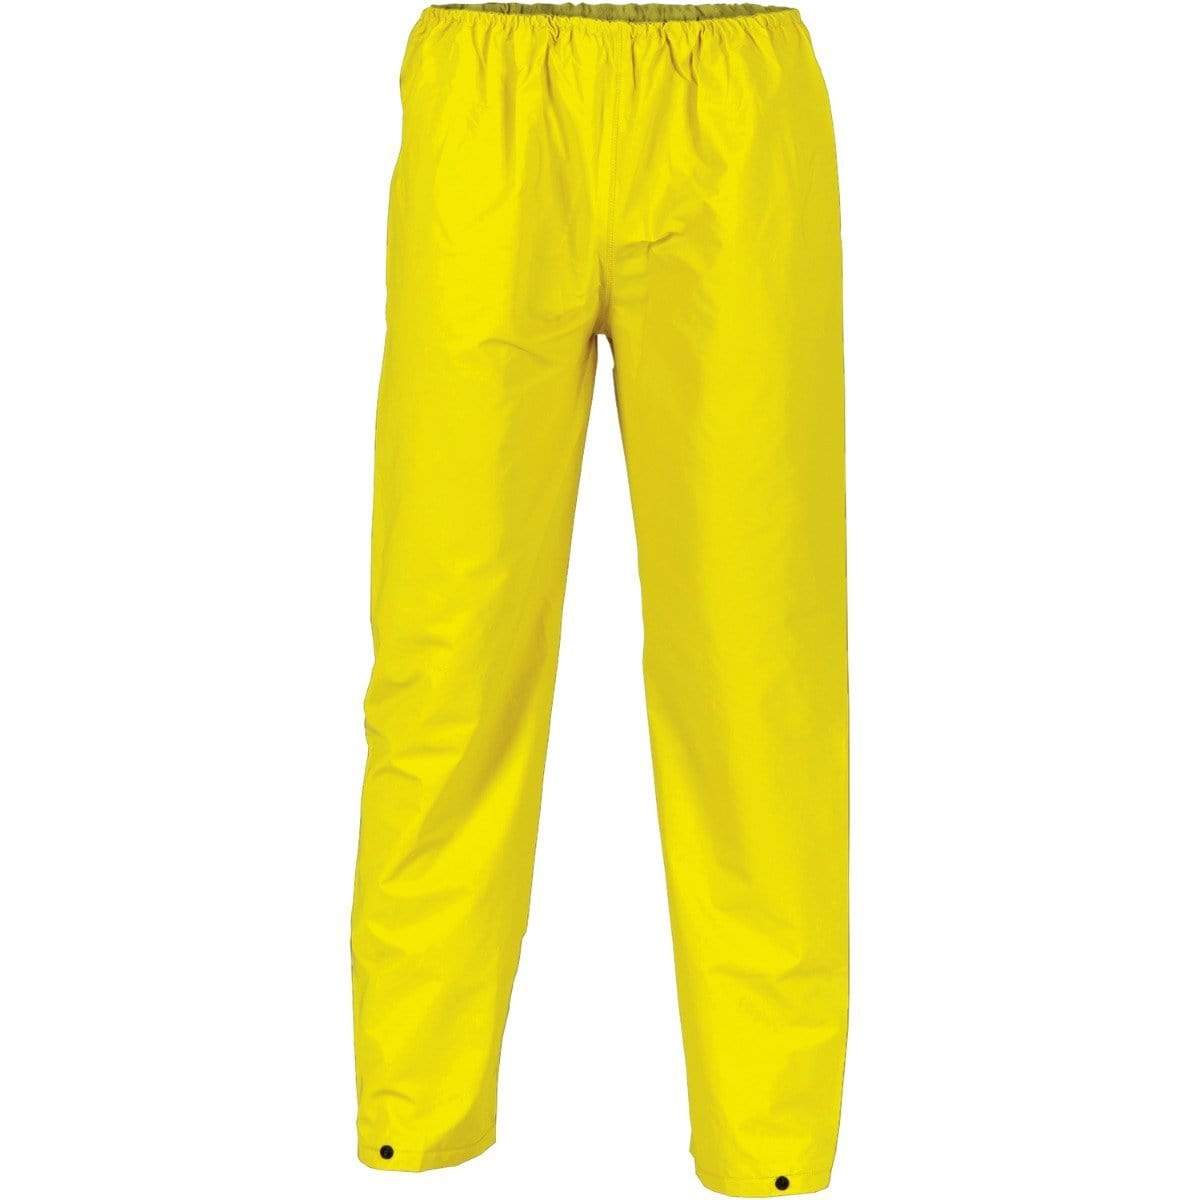 Dnc Workwear Pvc Rain Pants - 3703 Work Wear DNC Workwear Yellow S 